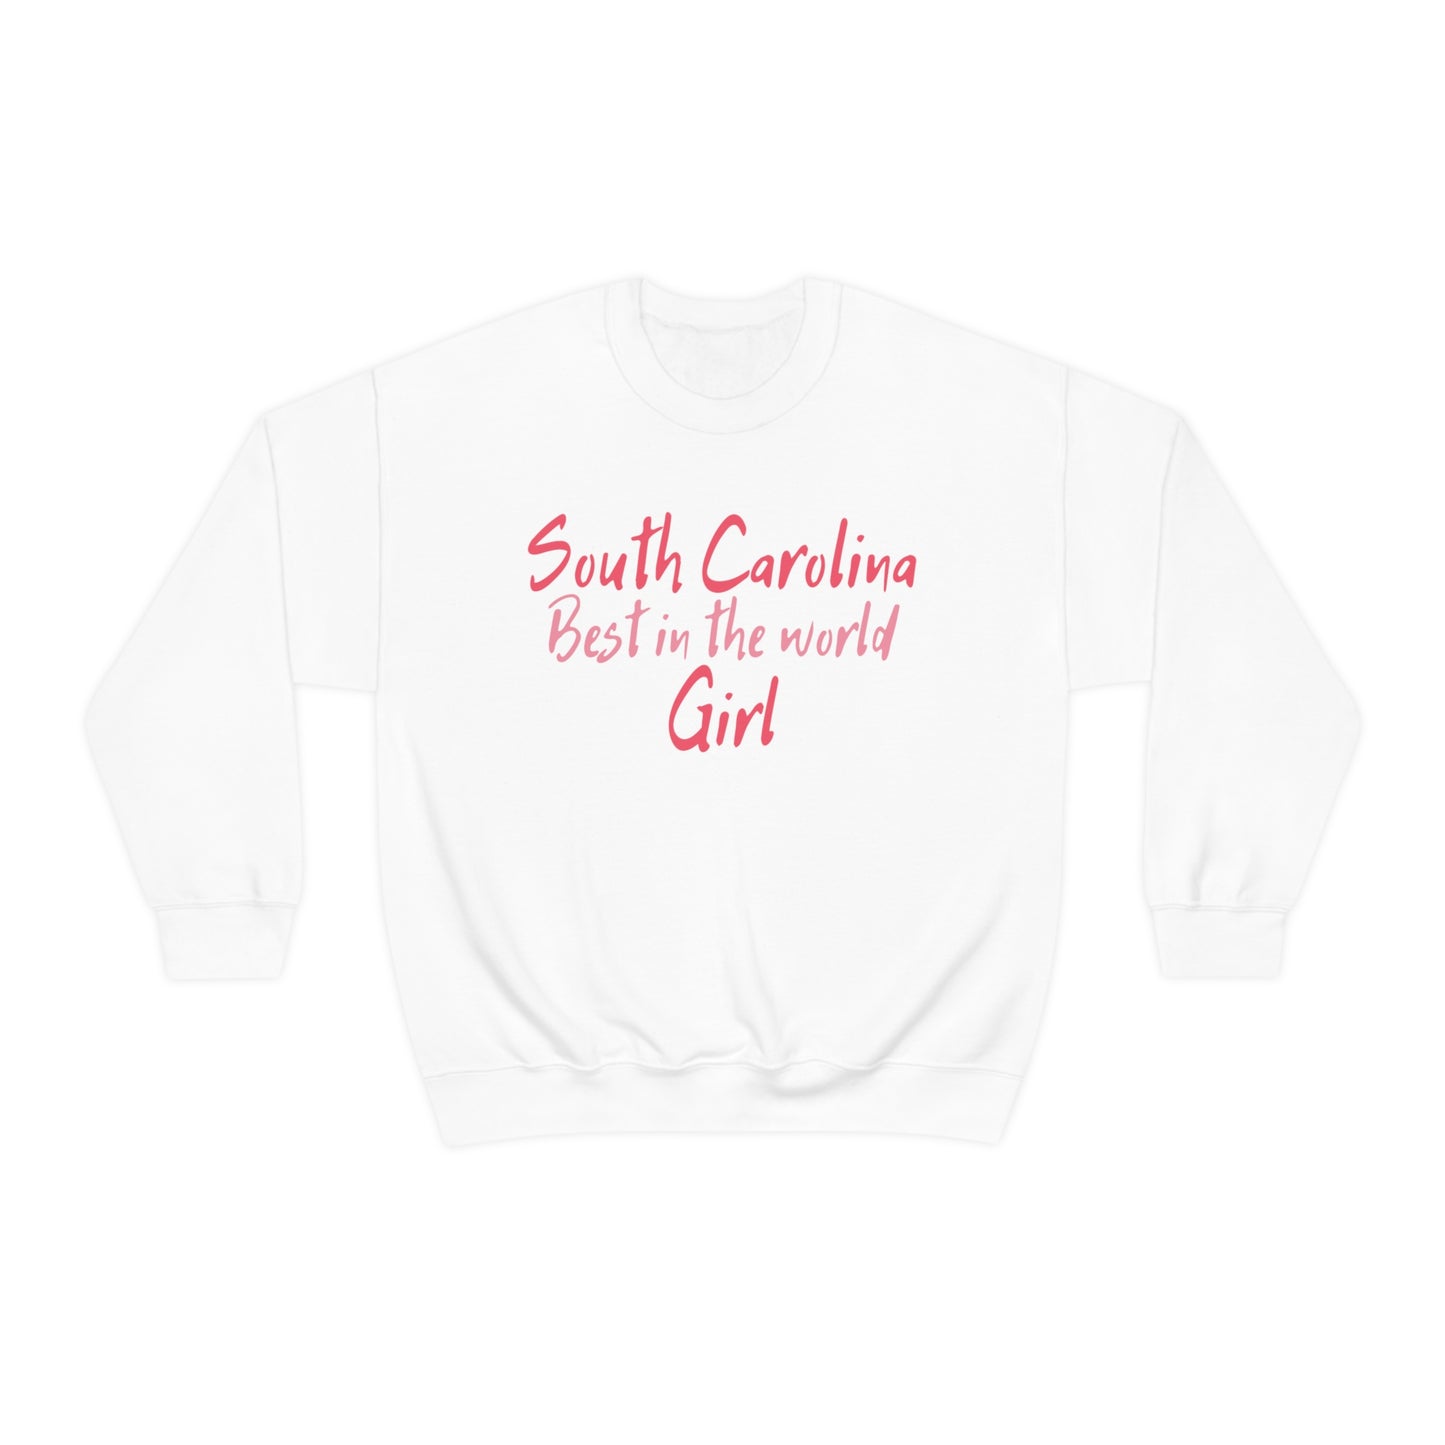 South Carolina Best in the World Girl Sweatshirt - Sweet Carolina